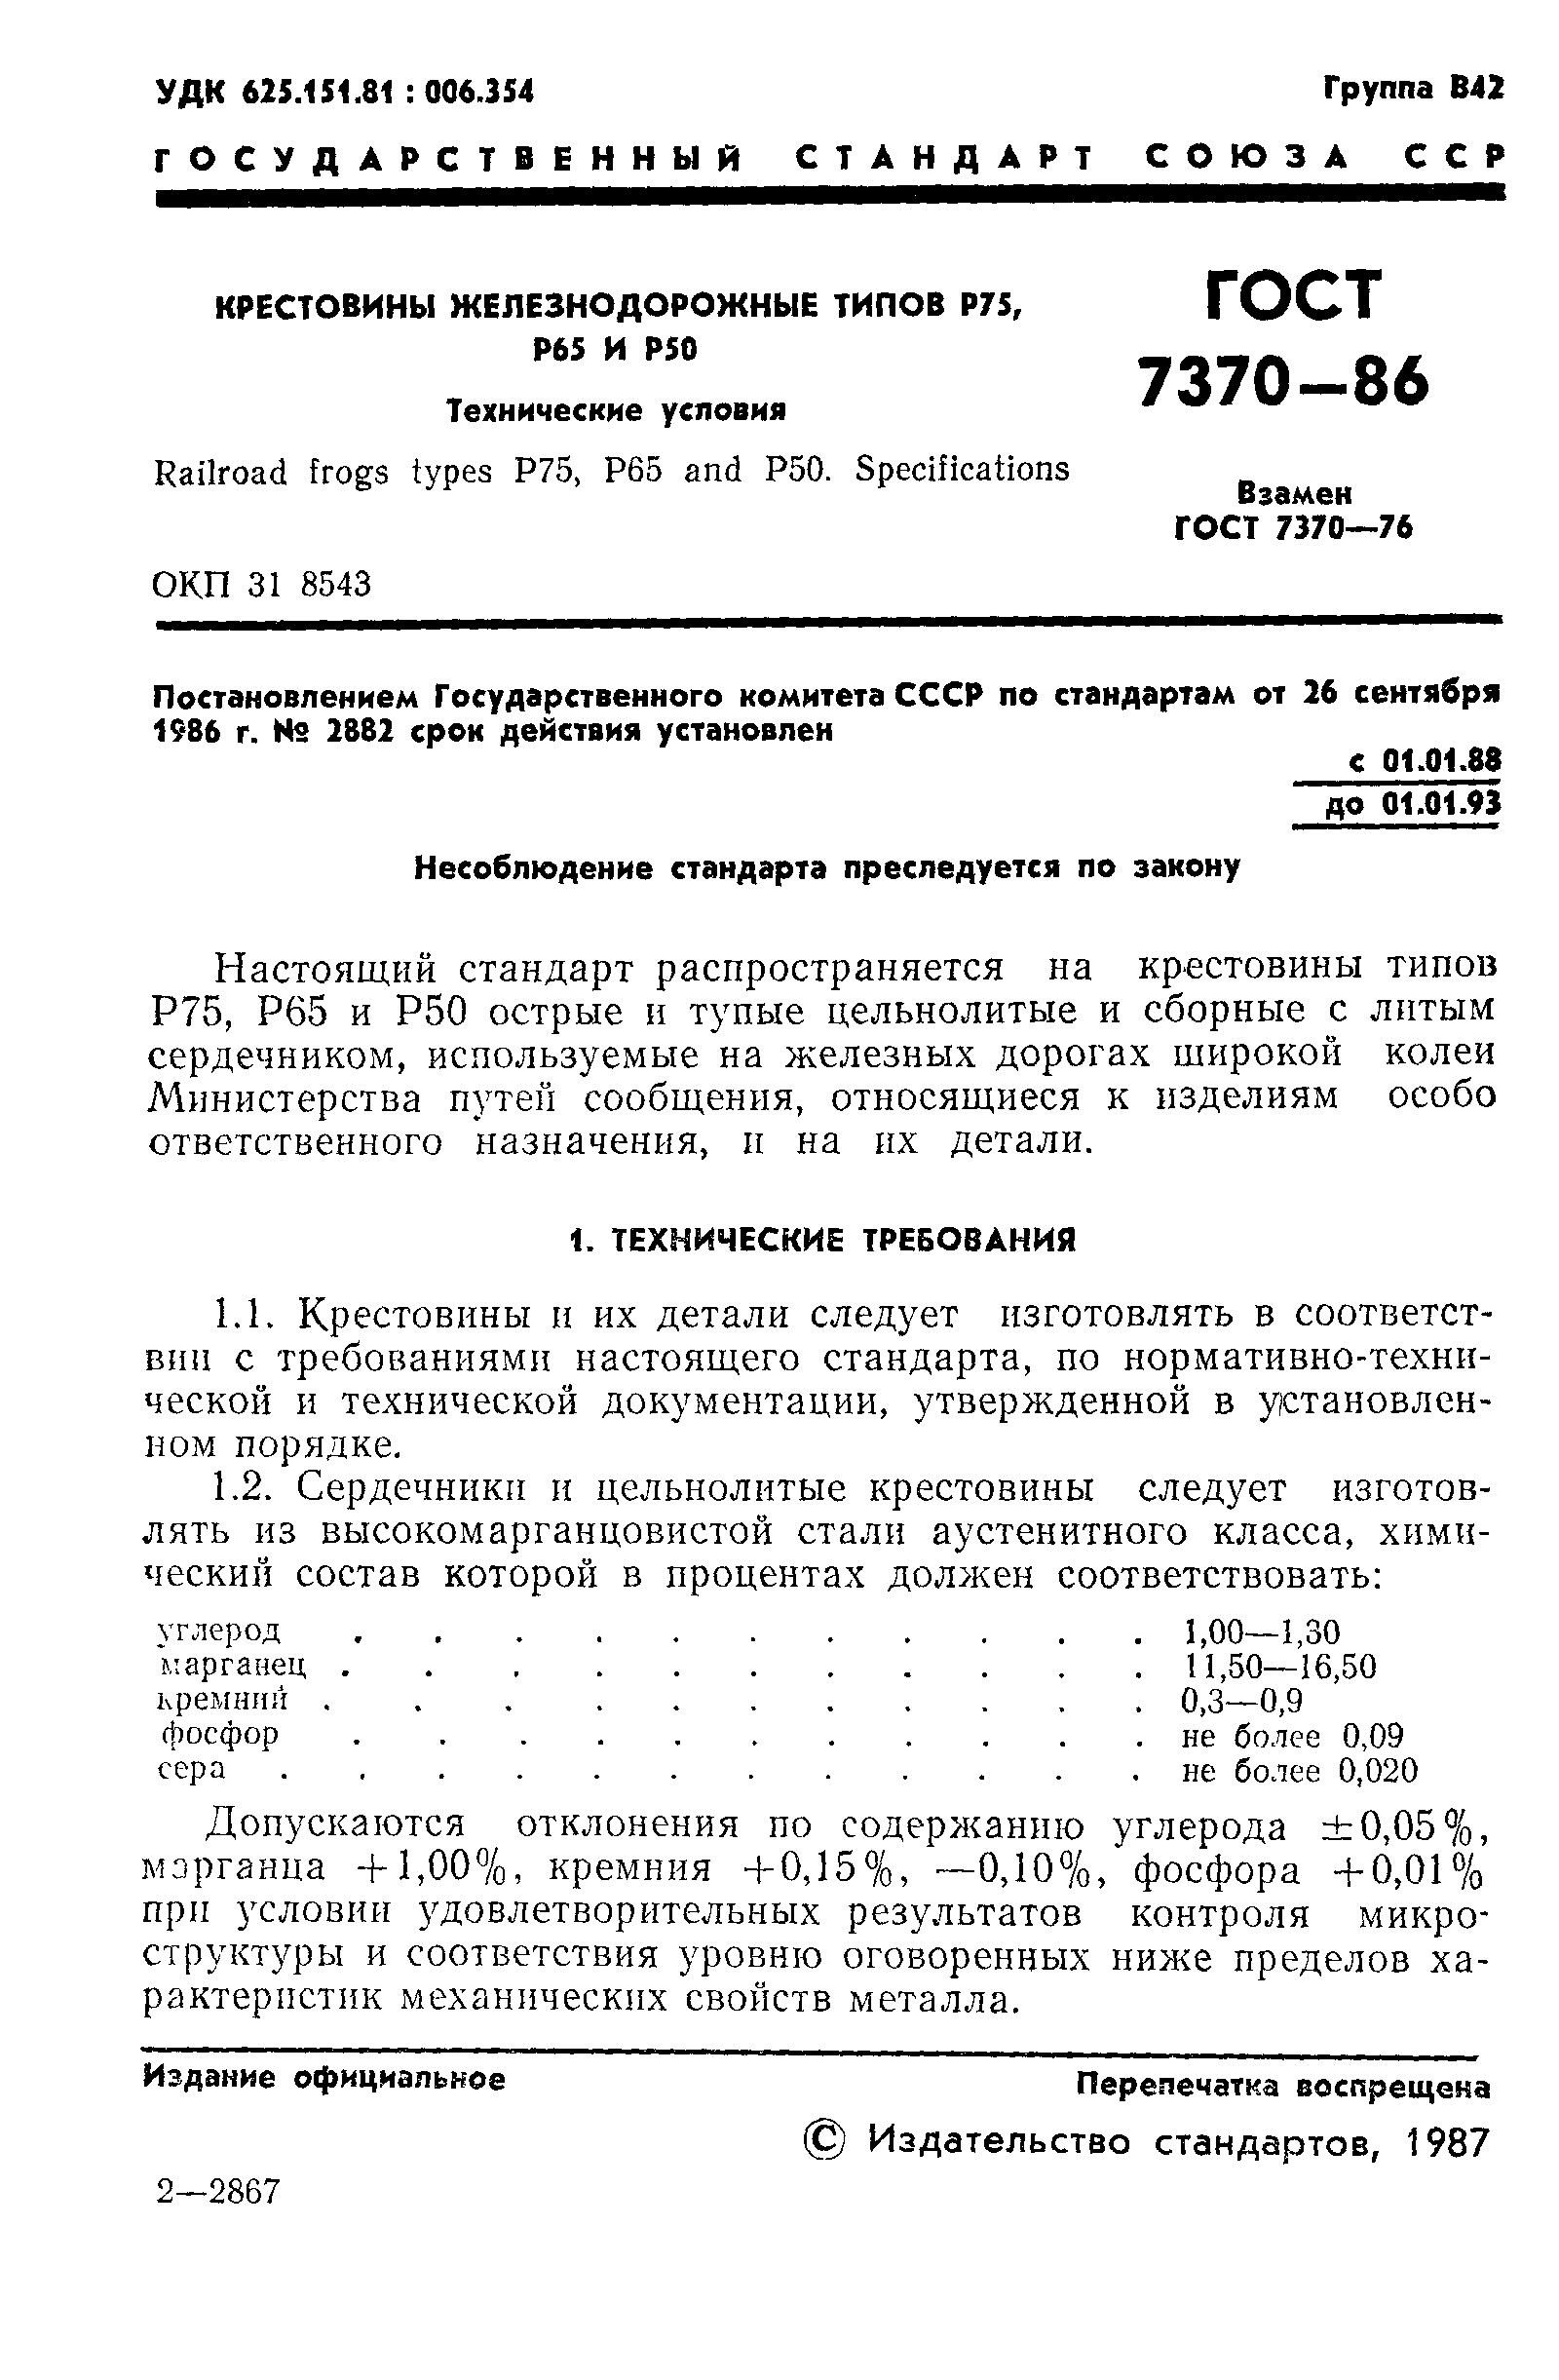 ГОСТ 7370-86